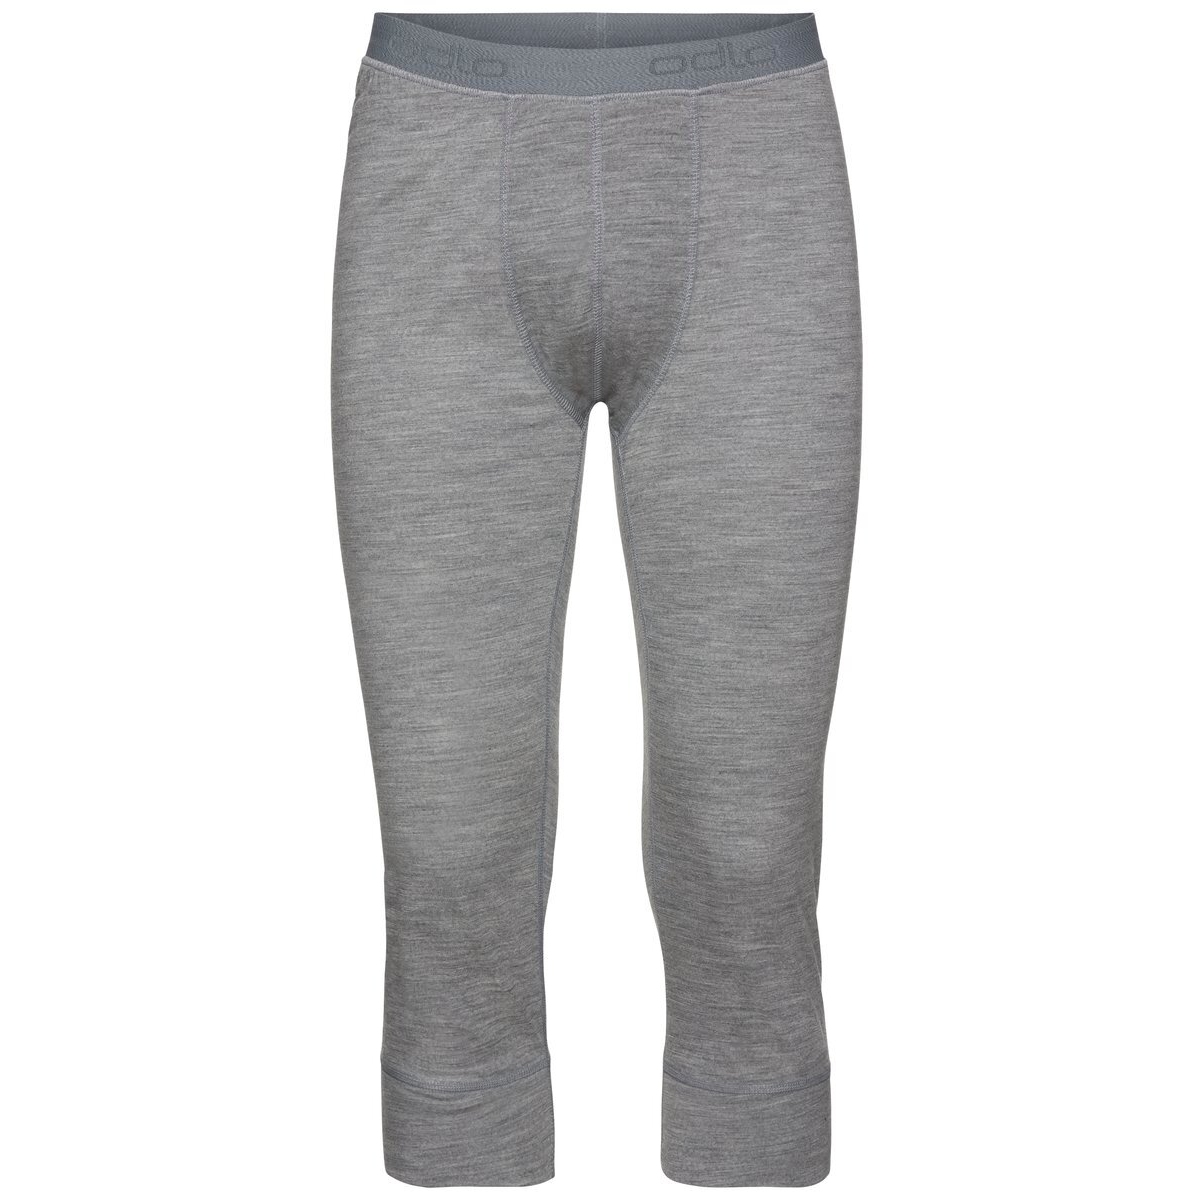 Picture of Odlo Natural 100% Merino Warm 3/4 Base Layer Pants Men - grey melange - grey melange